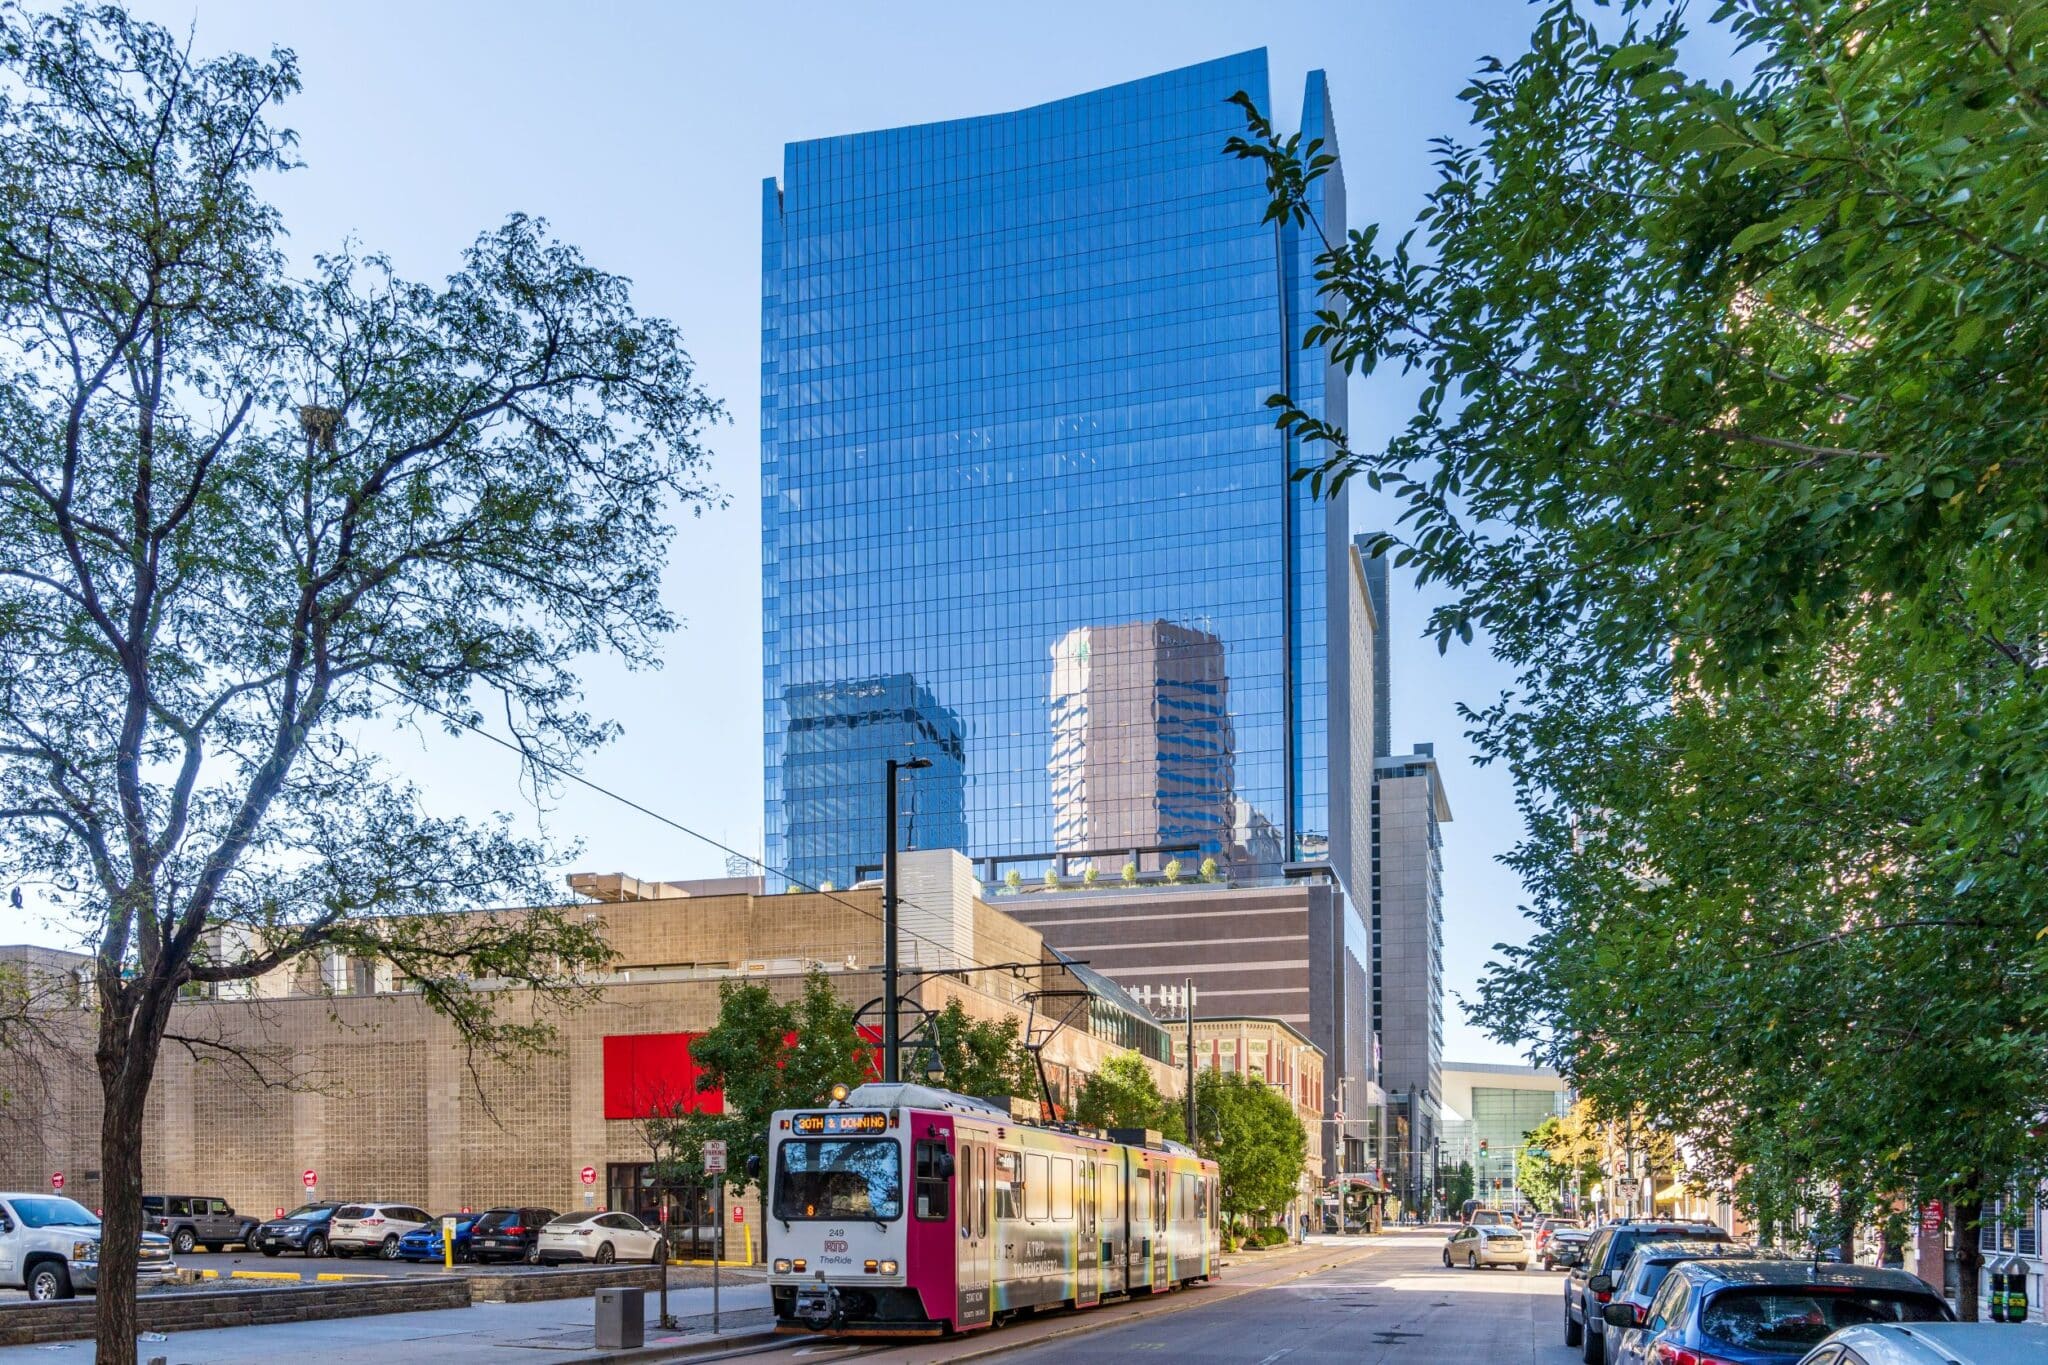 Denver skyscraper lands a fourth law firm